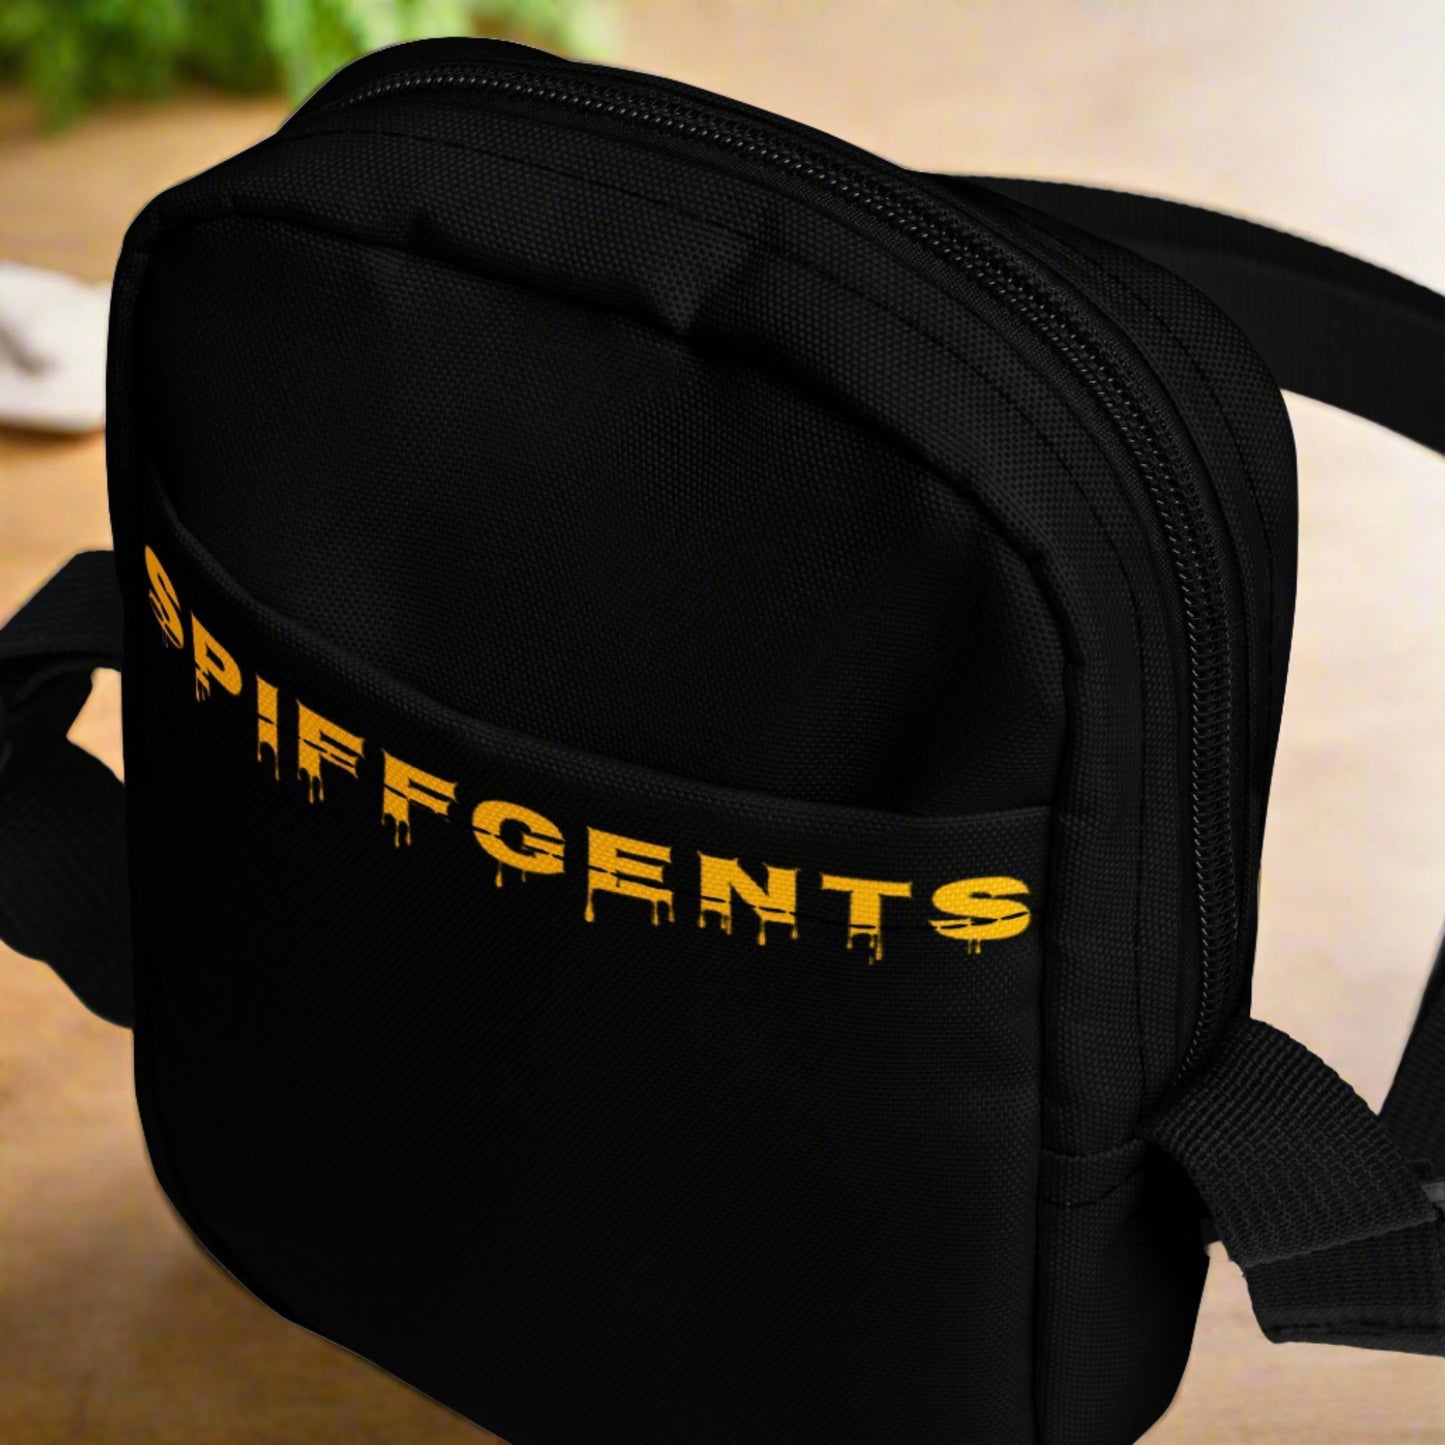 SpiffGents crossbody bag